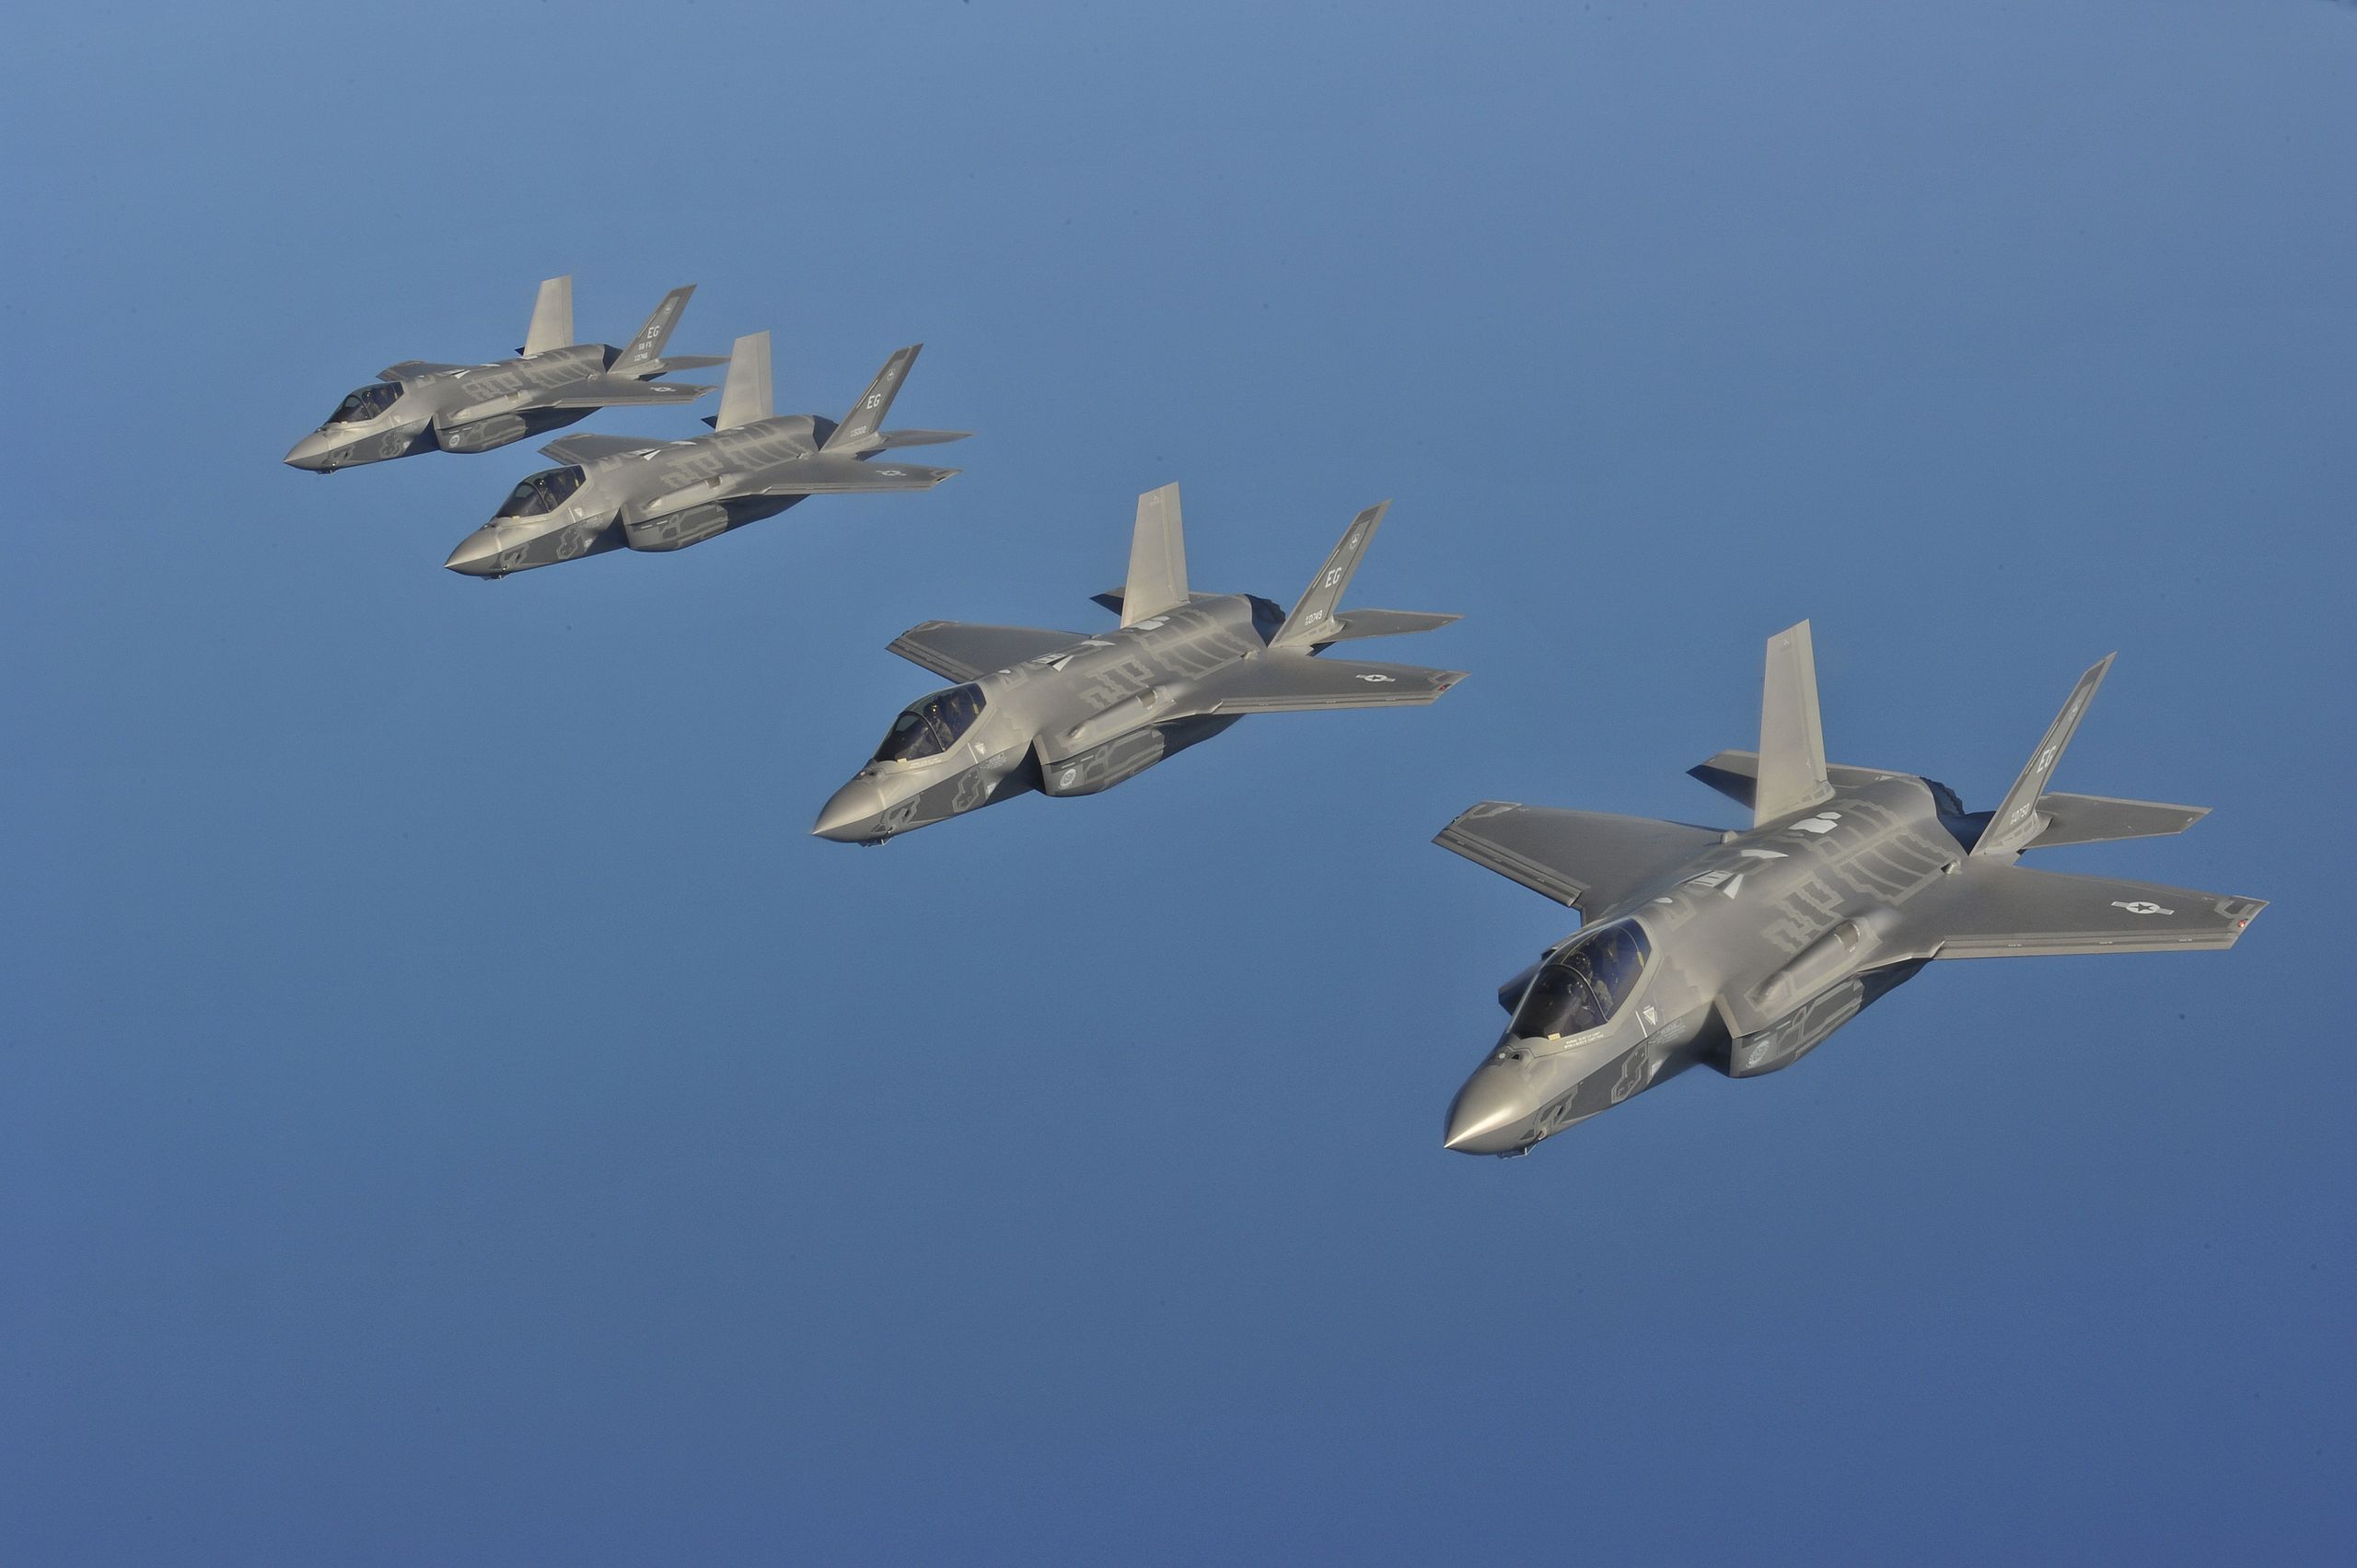 Four F-35A Lightnining fighter jets in formation flight.